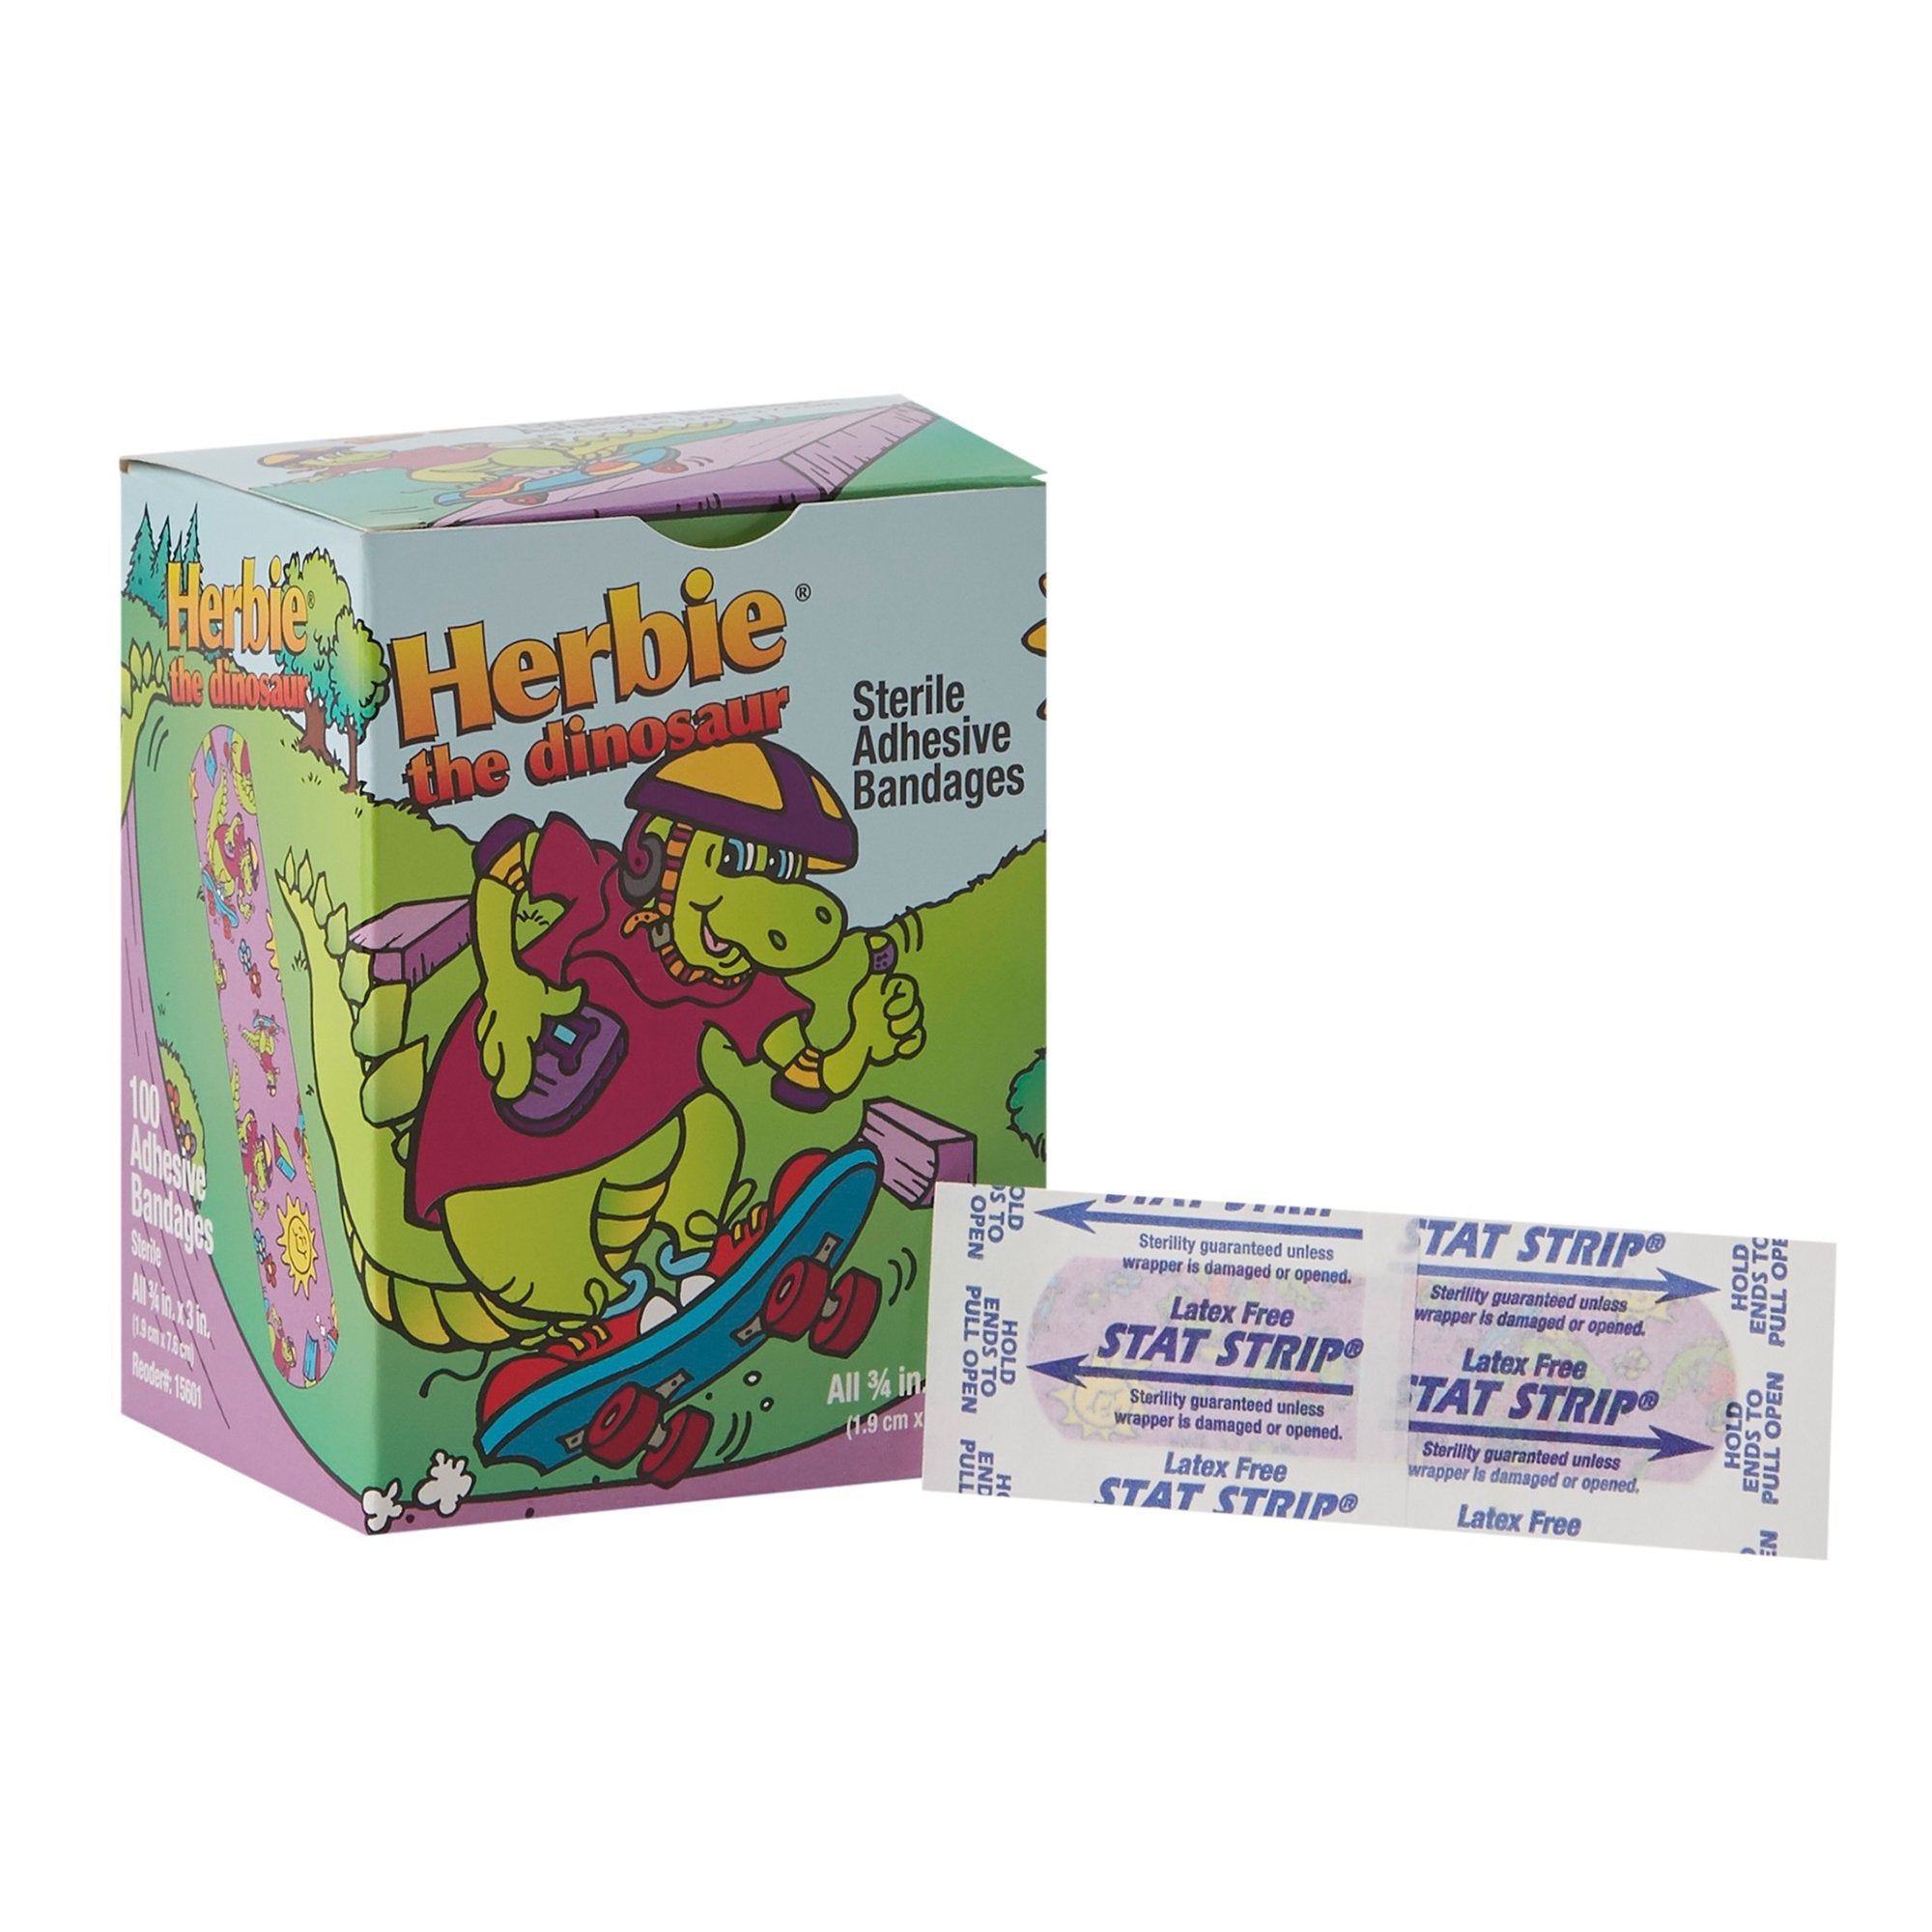 Adhesive Strip American® White Cross Stat Strip® 3/4 X 3 Inch Plastic Rectangle Kid Design (Herbie the Dinosaur) Sterile